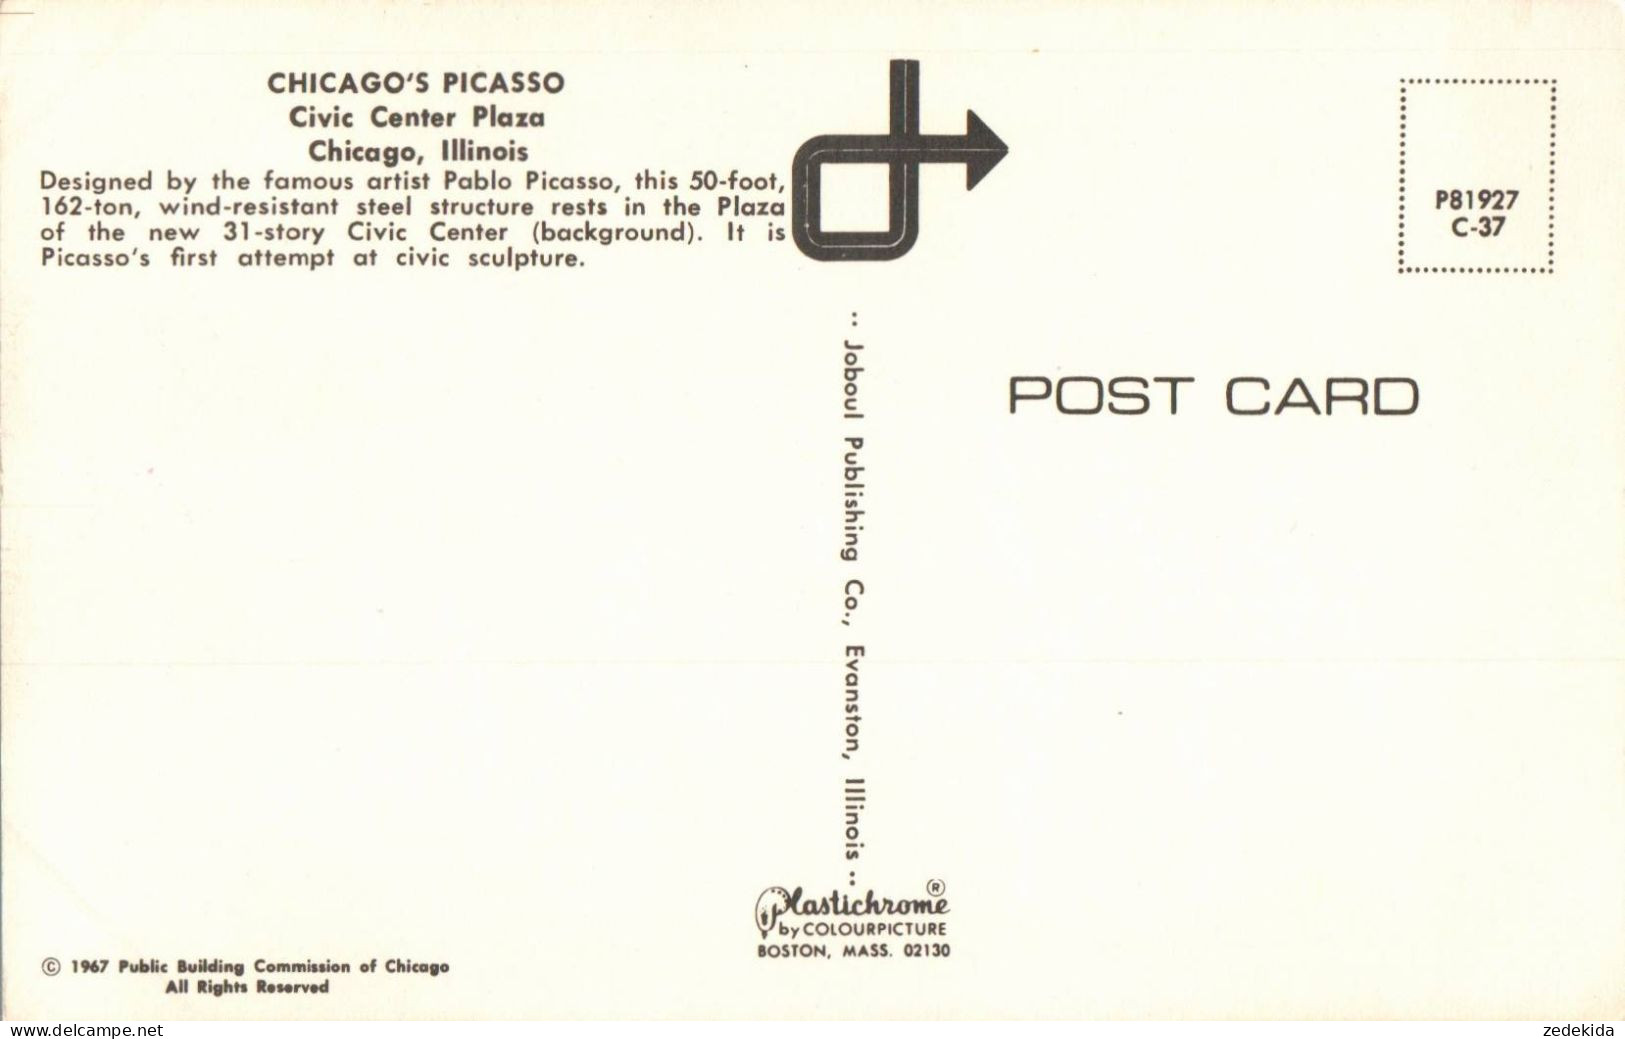 H1895 - Picasso Pablo - Chicago Civic Center Plaza - Picasso